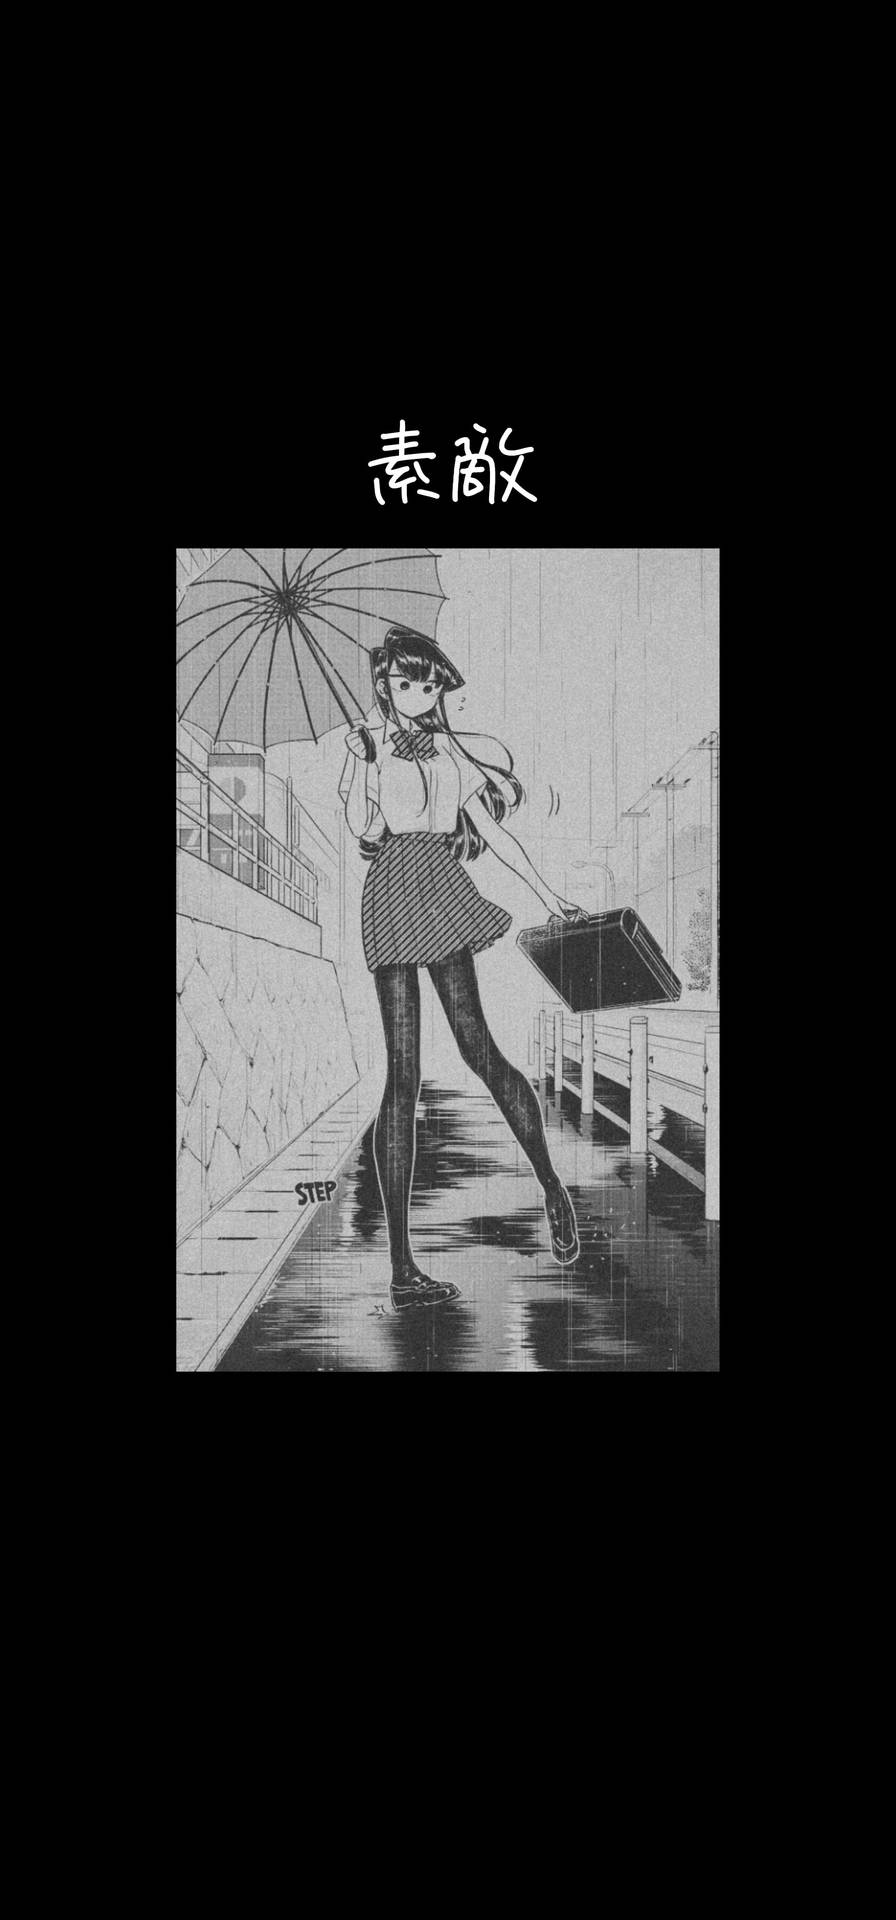 Charming Aesthetic Anime Girl For Iphone Wallpaper